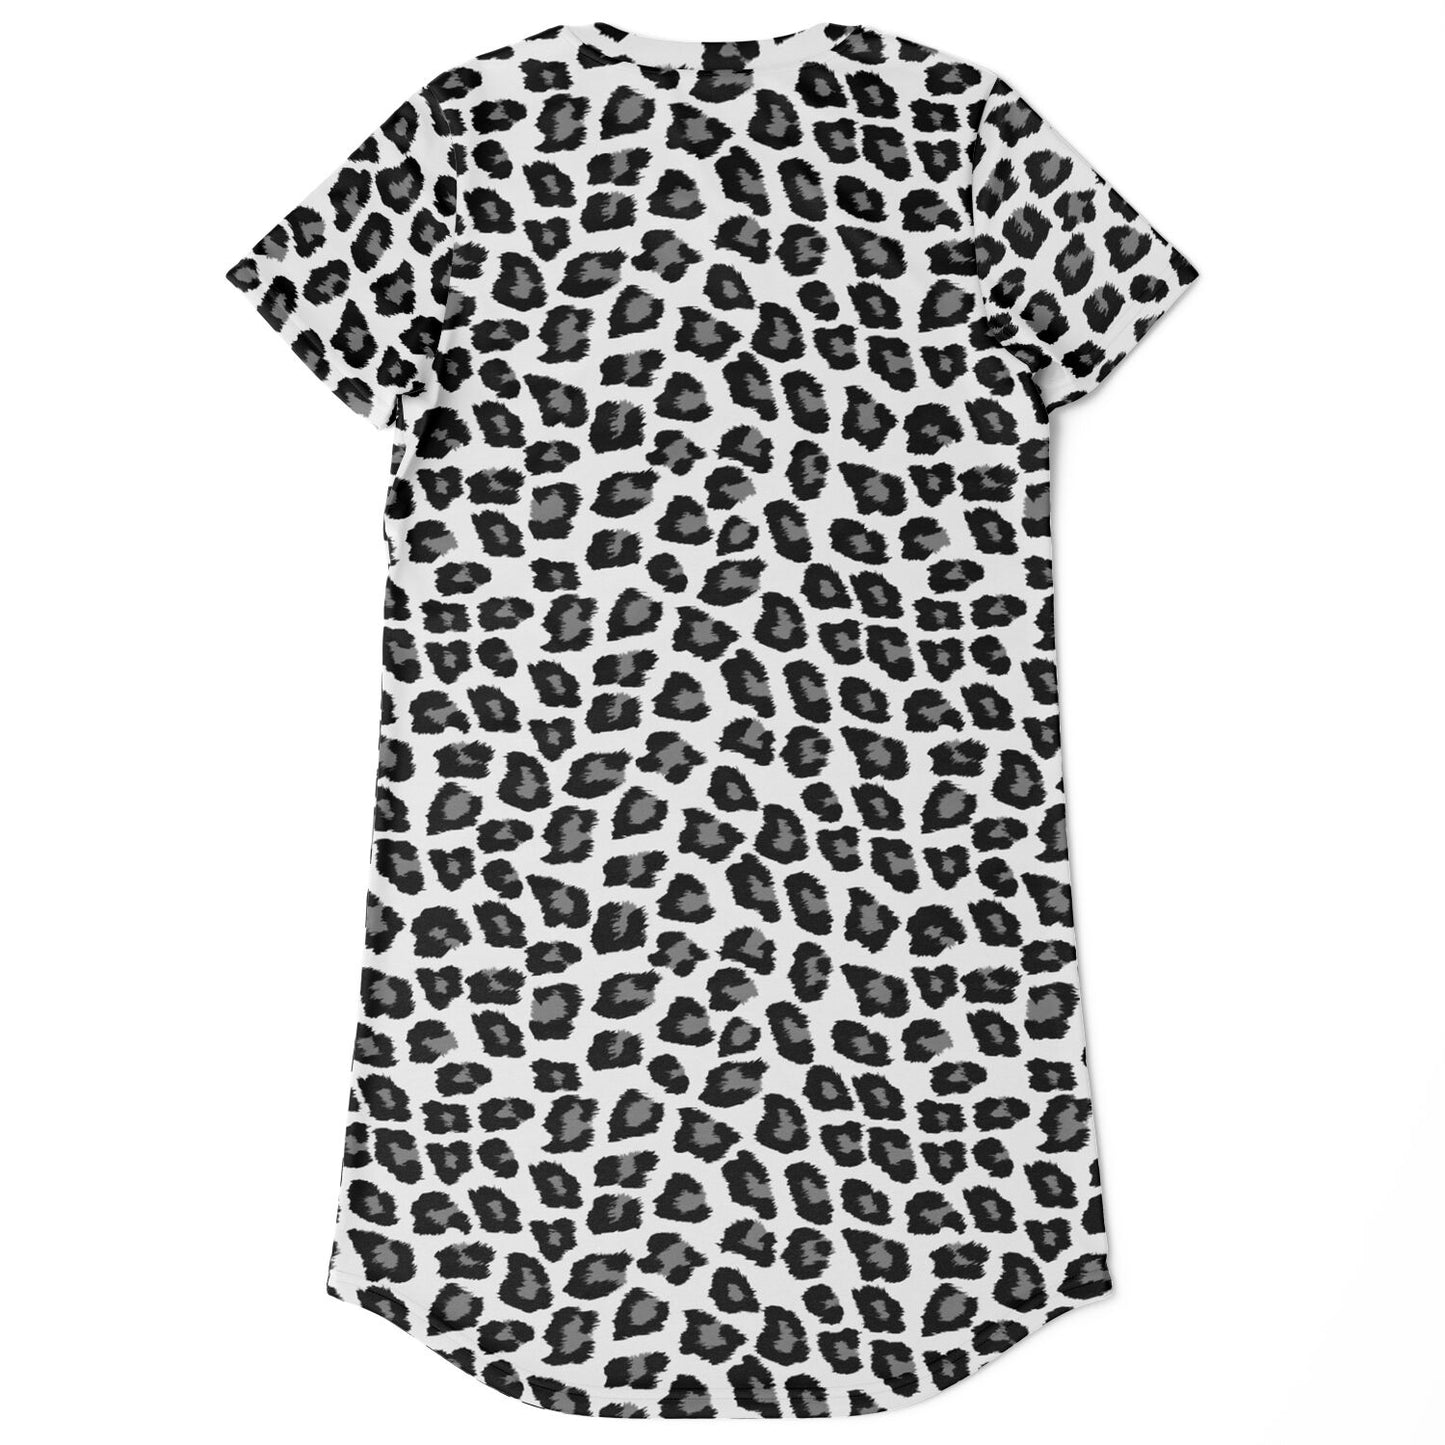 Snow Leopard Tshirt Dress, Black White Animal Print Women Ladies Mini Summer Beach Shirt Festival Concert Casual Short Sleeve Cover Up Tee